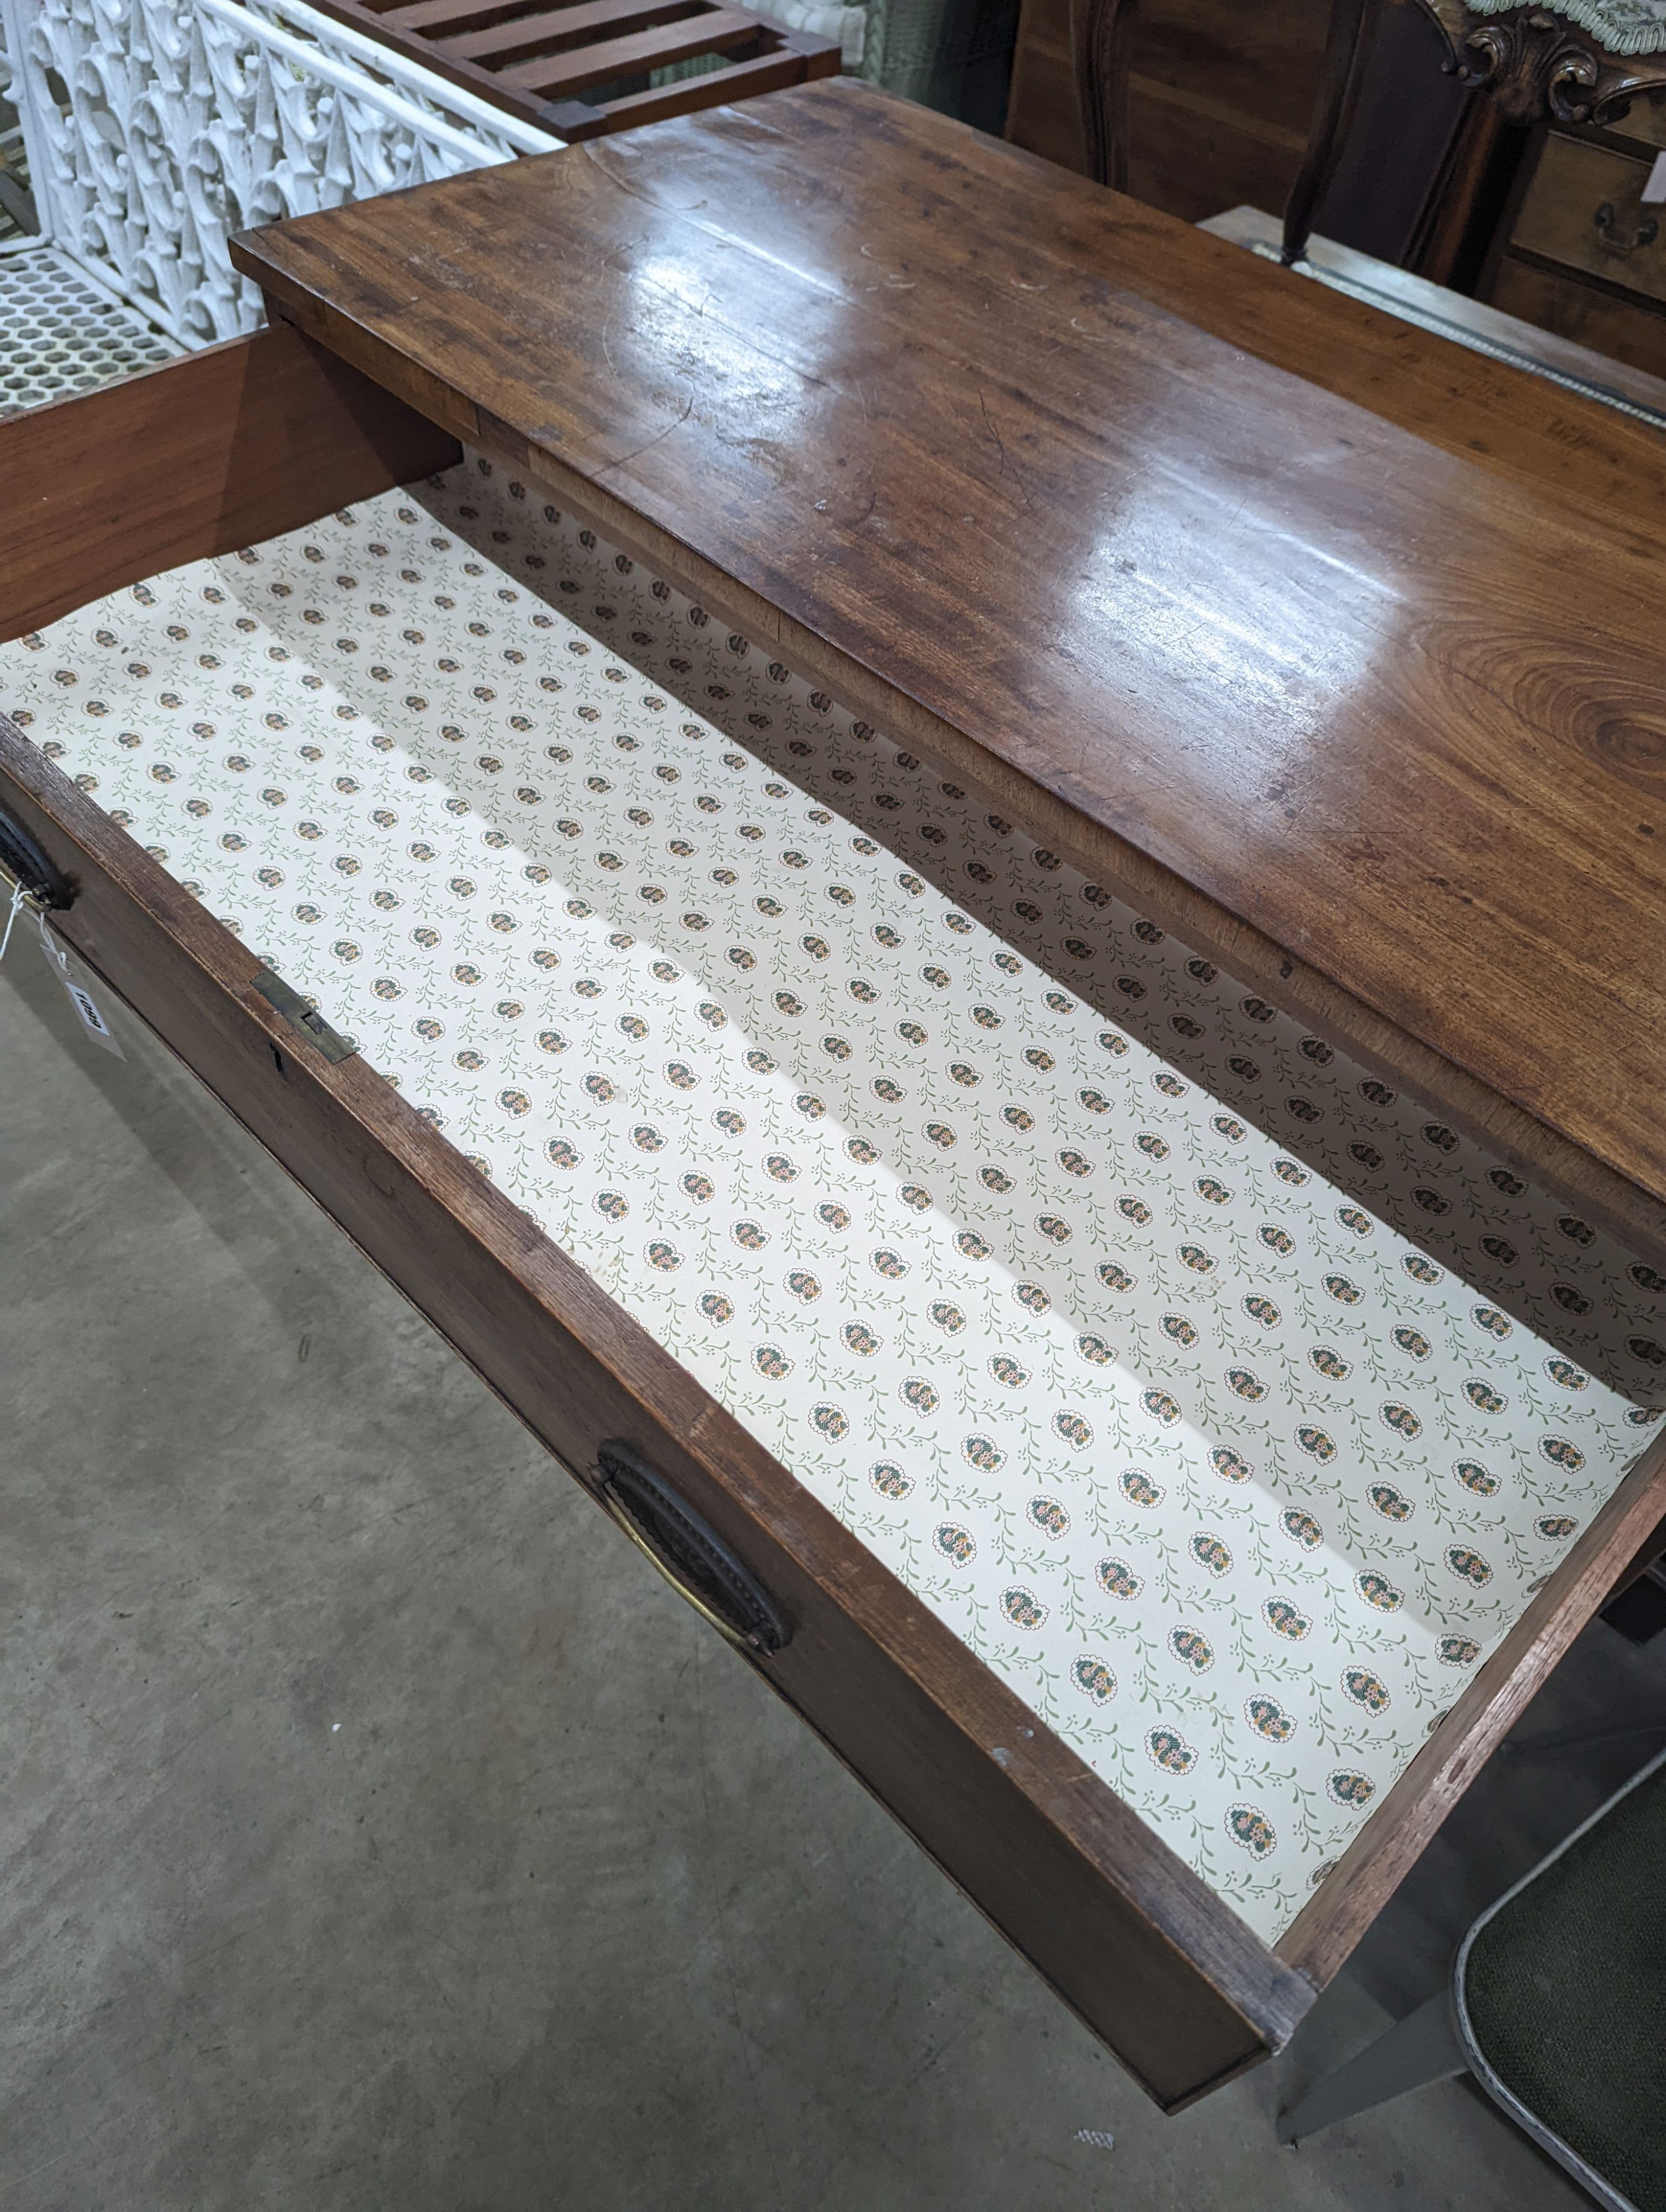 A George IV four drawer mahogany chest, width 107cm, depth 53cm, height 100cm